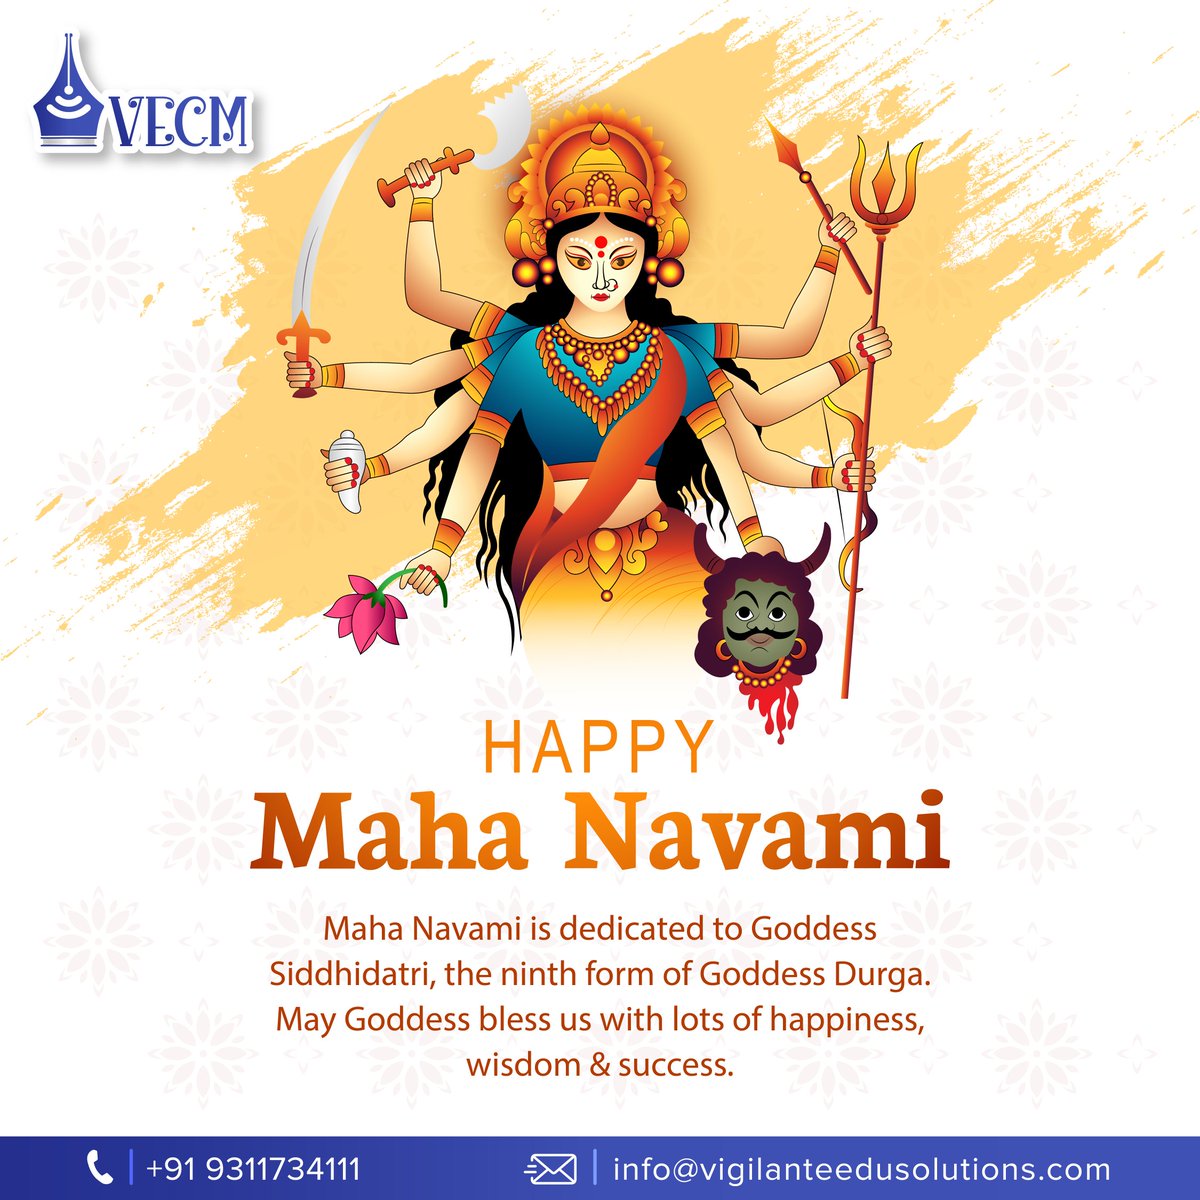 Maha Navami is dedicated to Goddess Siddhidatri, the ninth form of Goddess Durga.
May Goddess bless us with lots of happiness, wisdom & success.
#vecm #mahanavami #happynavratri #navratri2022 #navratrispecial #shaktiutsav #navratri #celebrations #festival #happiness